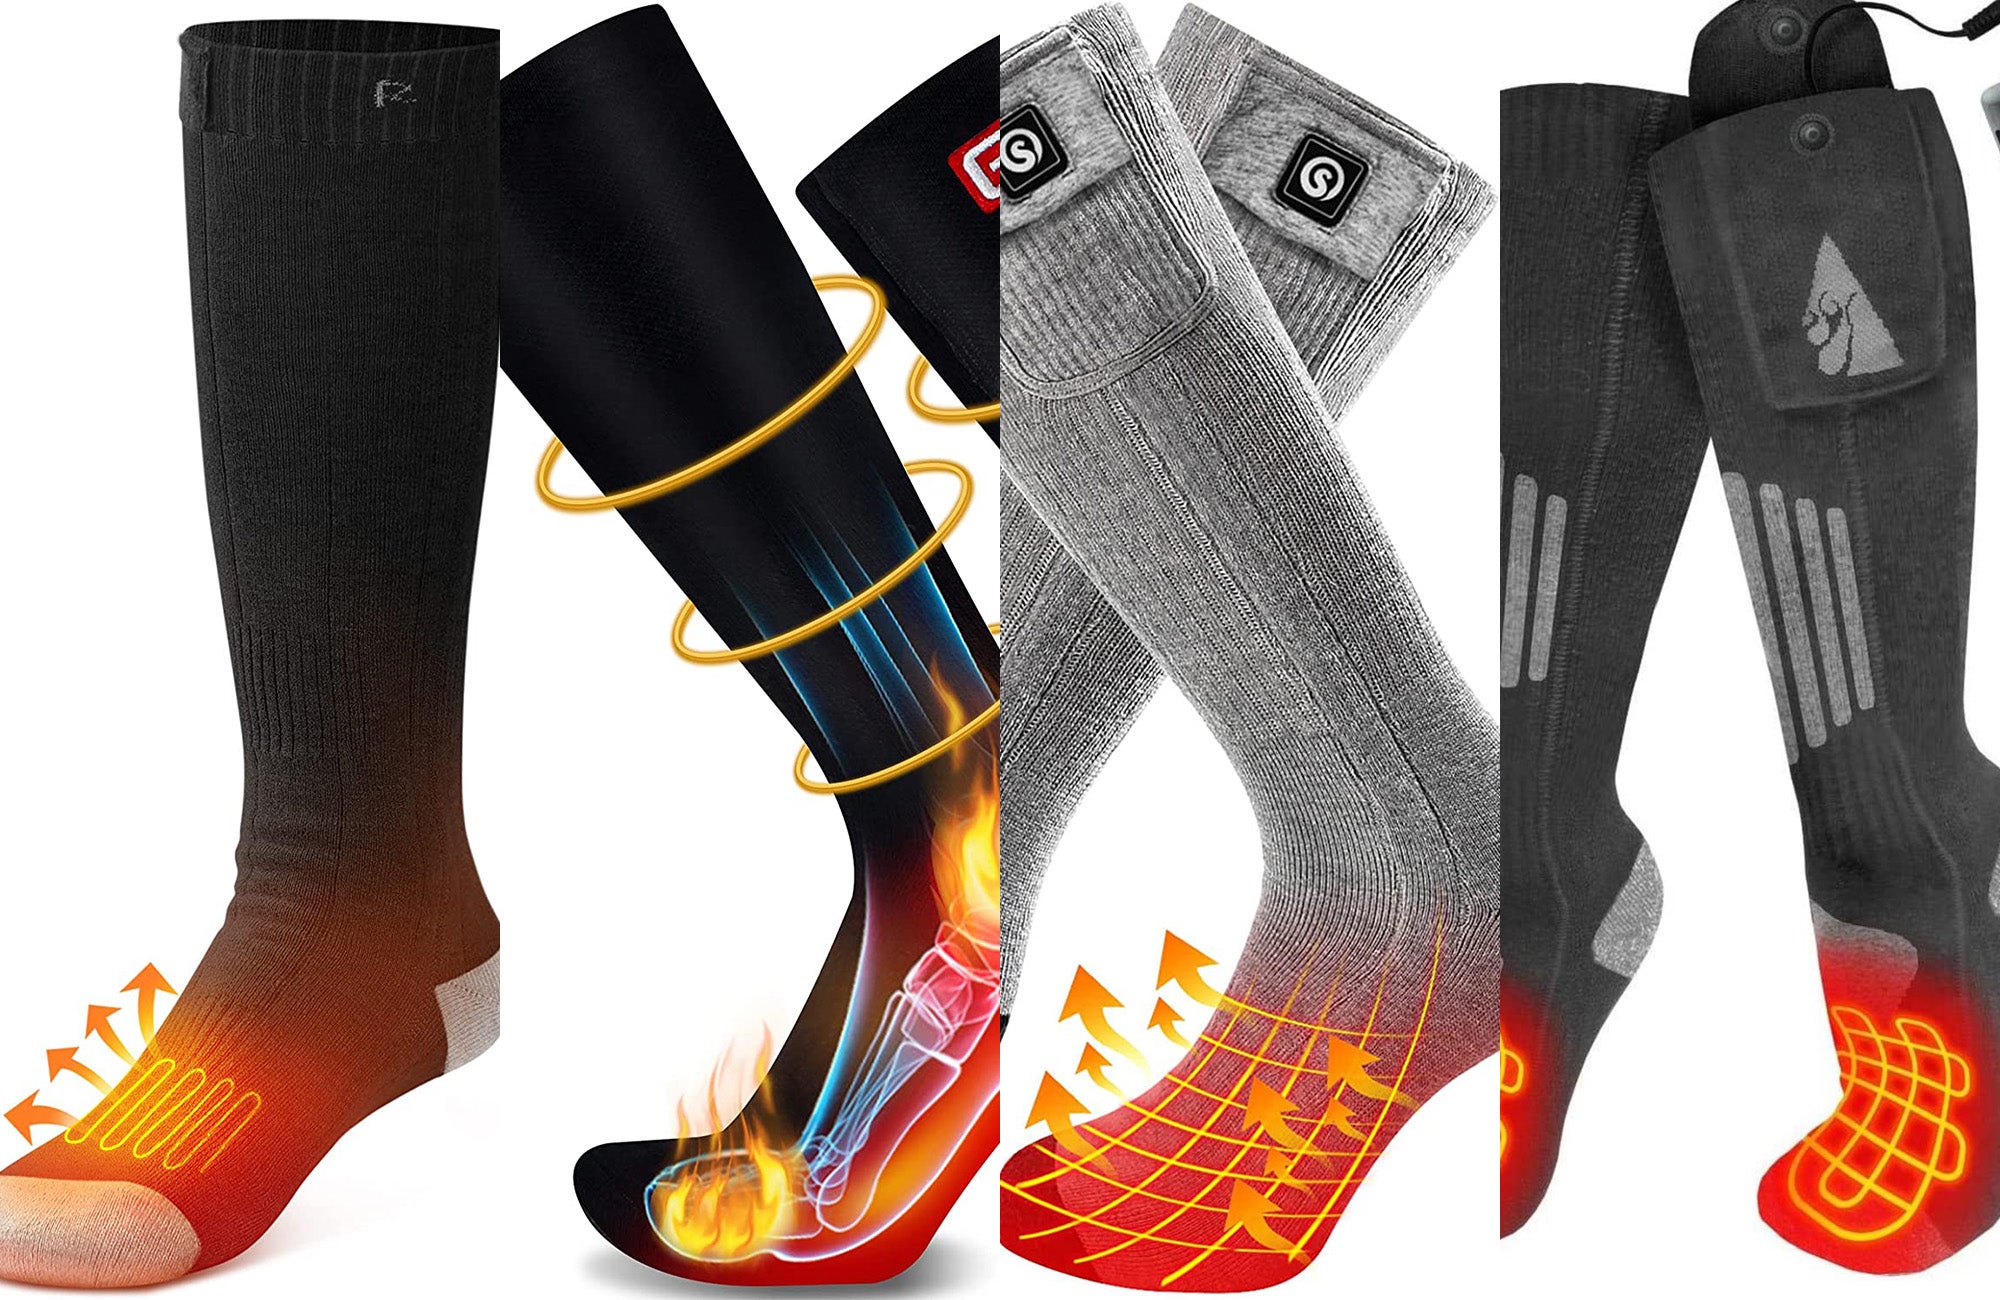 Volt Indoor/Outdoor Heated Slippers Offer Instant Warm Relief for Your Feet  - Tuvie Design